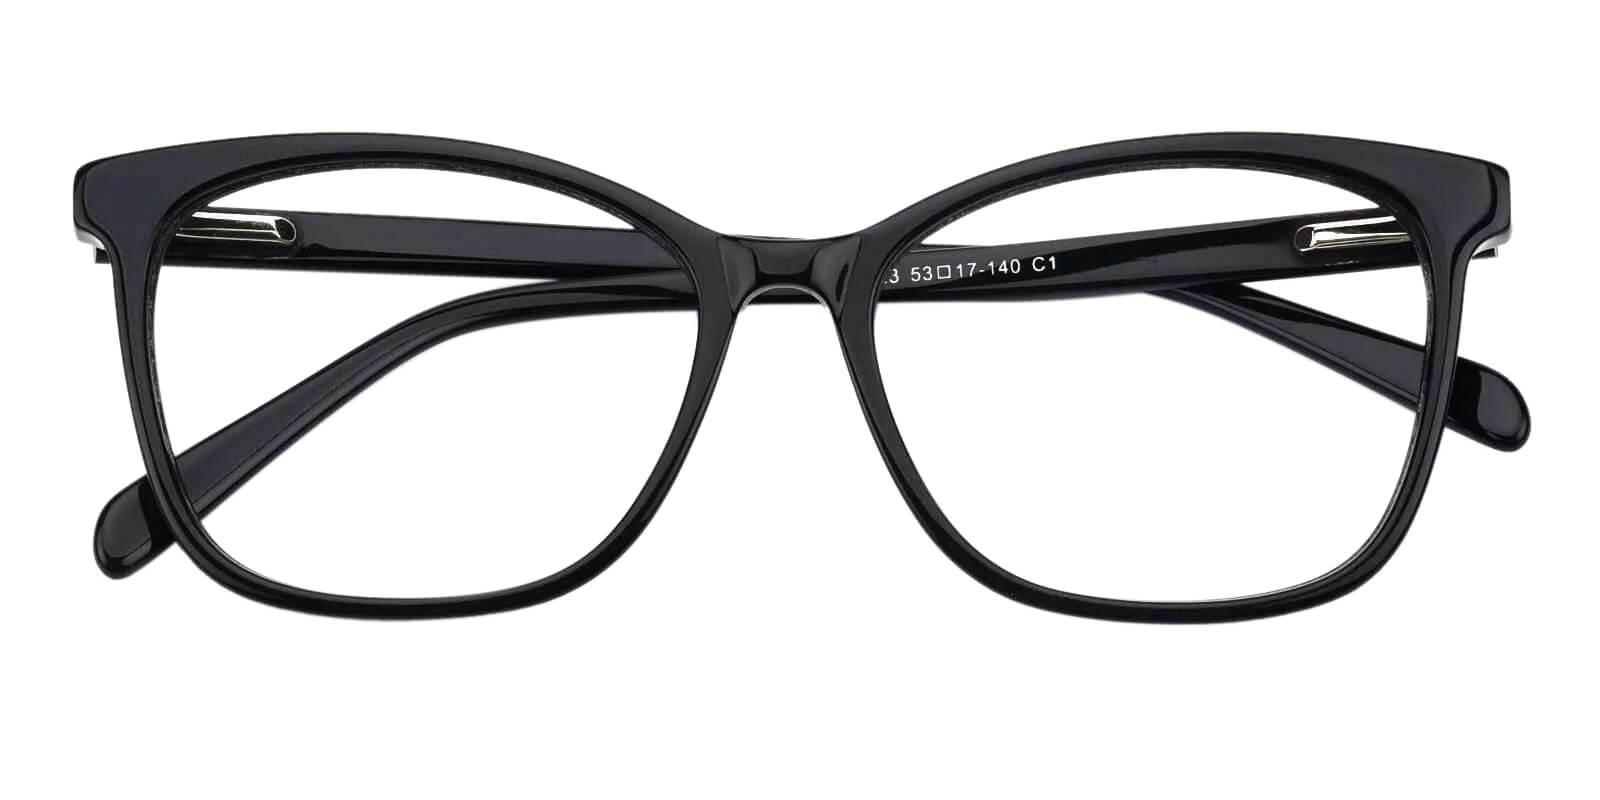 Coliny Black Acetate Eyeglasses , Fashion , SpringHinges , UniversalBridgeFit Frames from ABBE Glasses